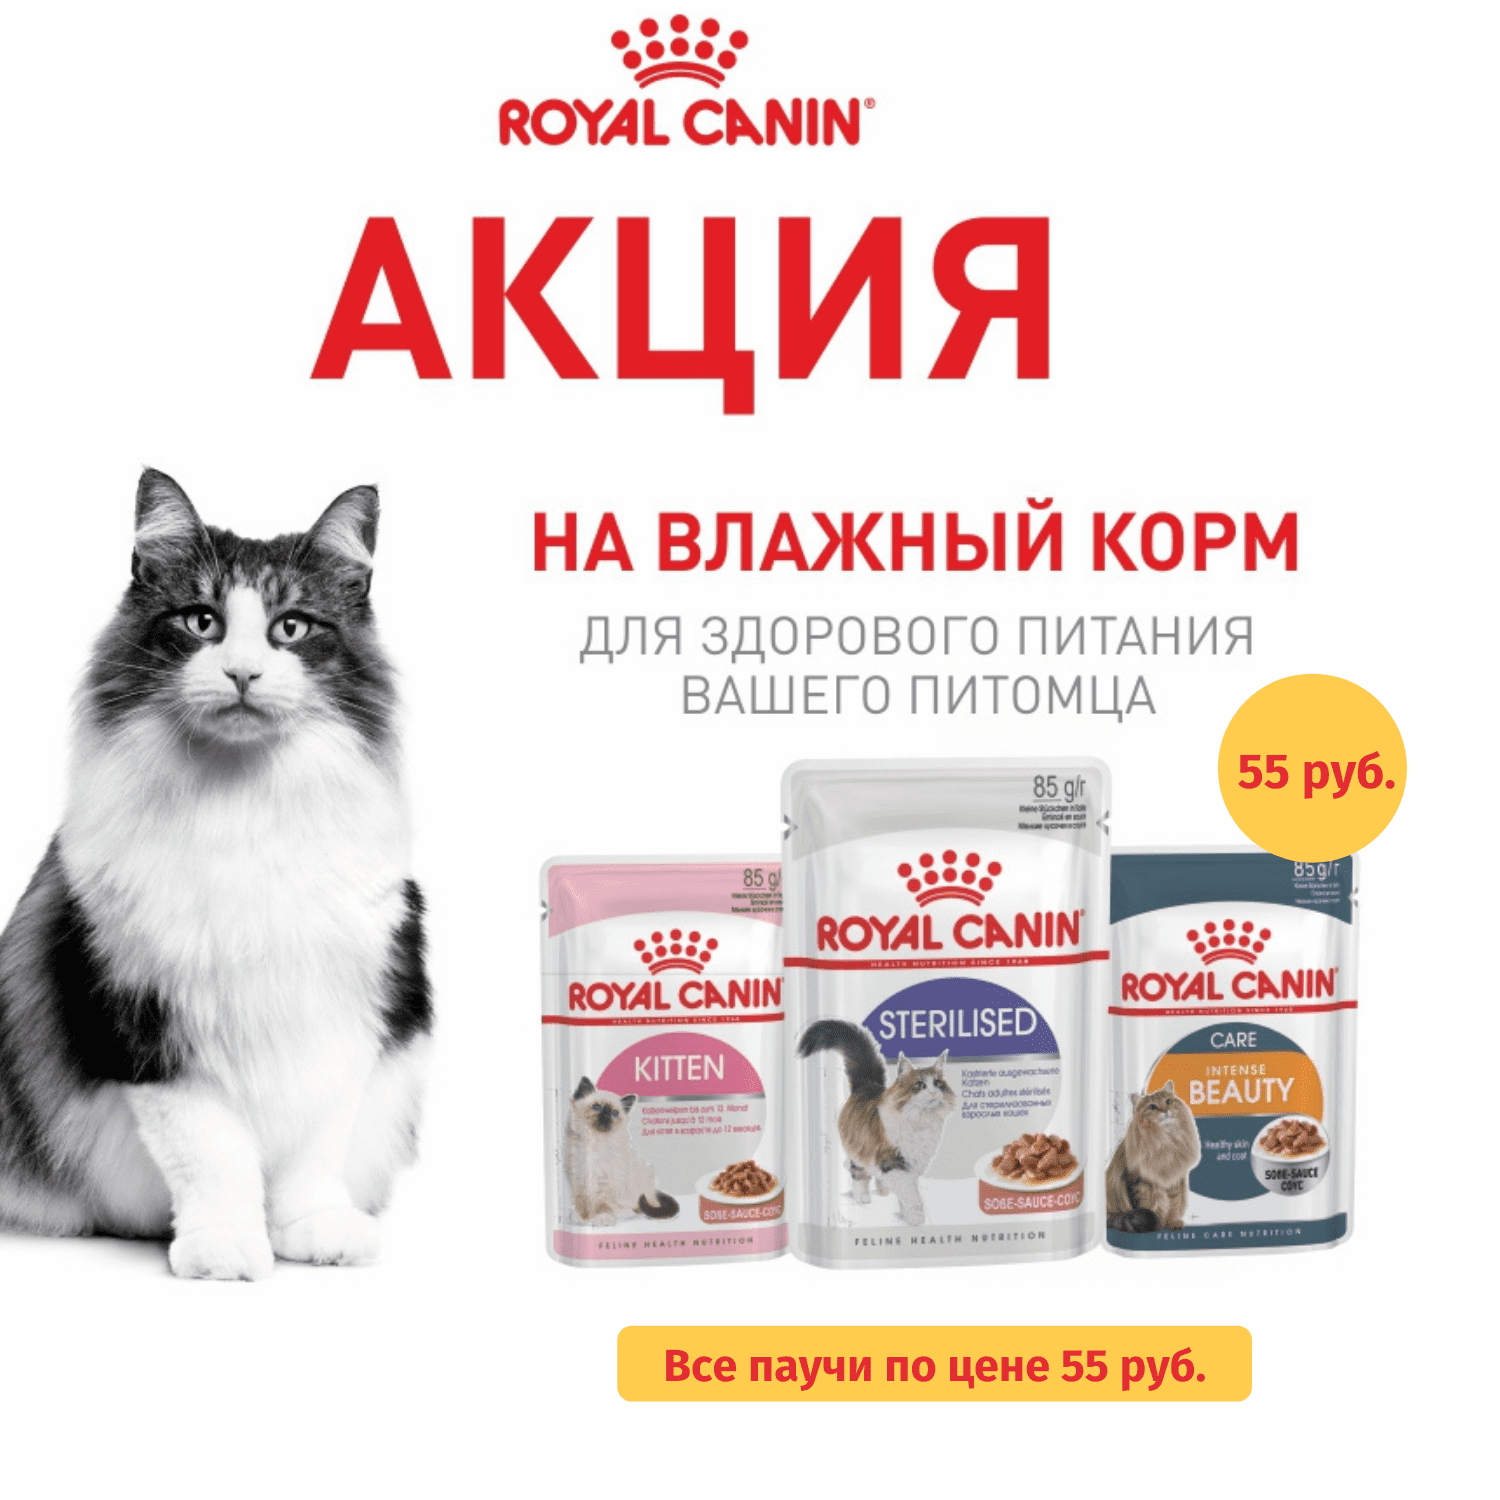 Все паучи Royal Canin цена 55 руб.